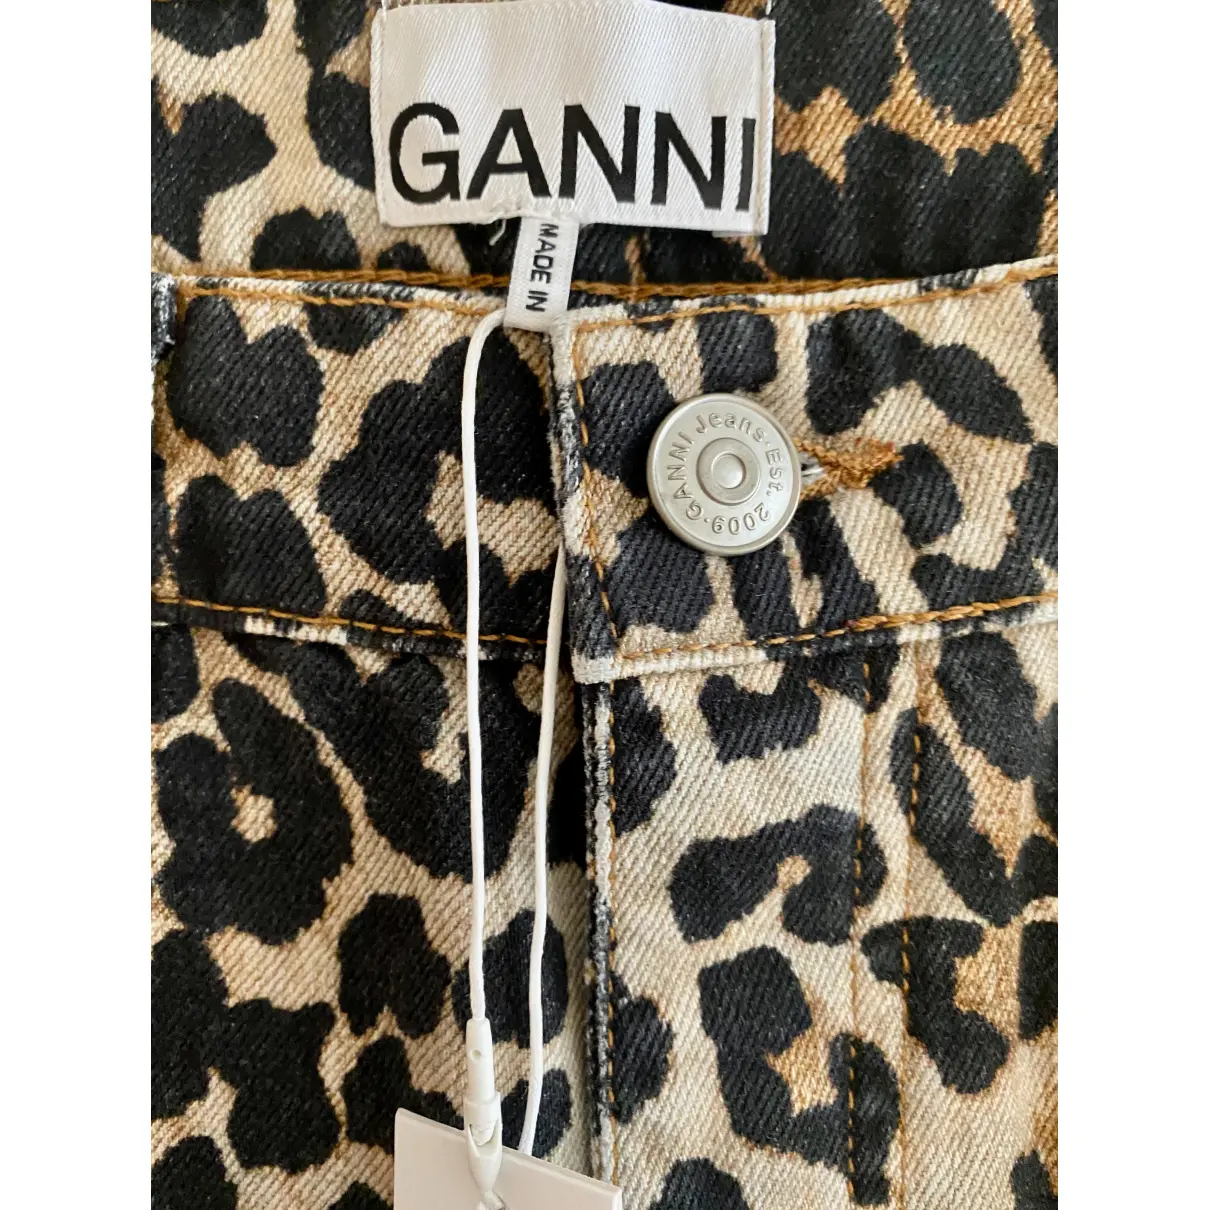 Buy Ganni Straight pants online